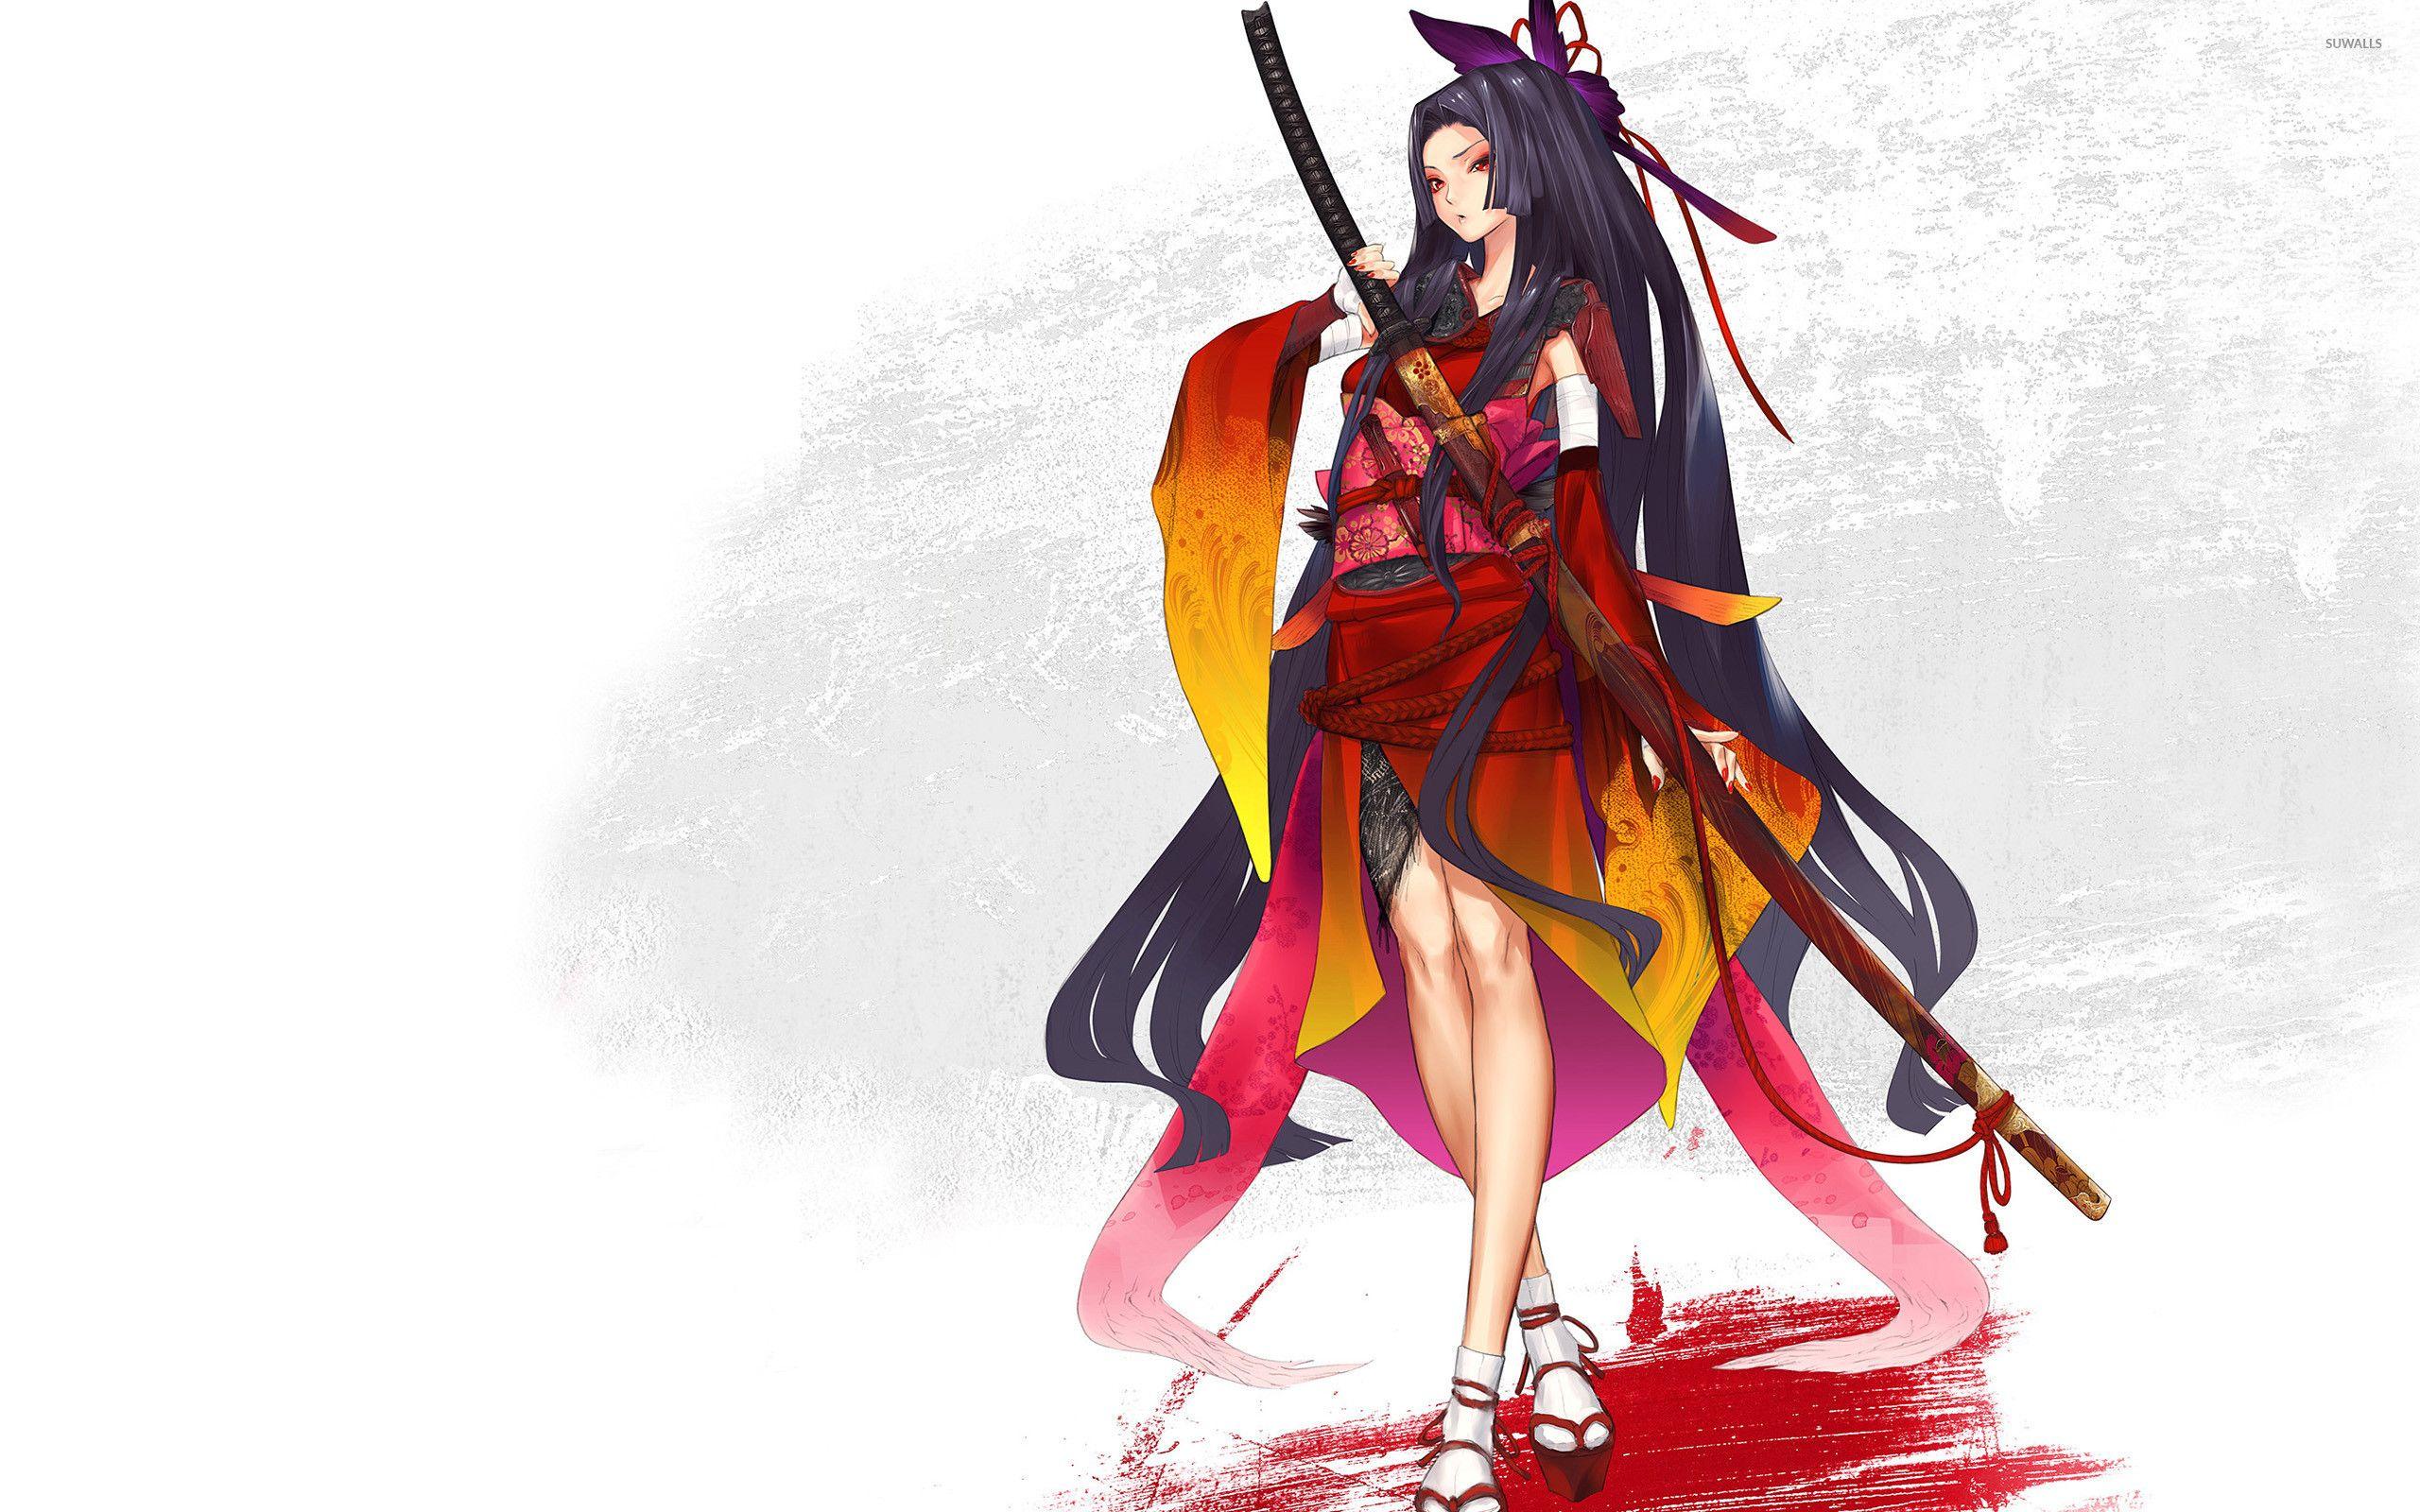 Cgi Fantasy Anime Samurai Girl Dual Katanas Stock Photo by Ravven 327616356